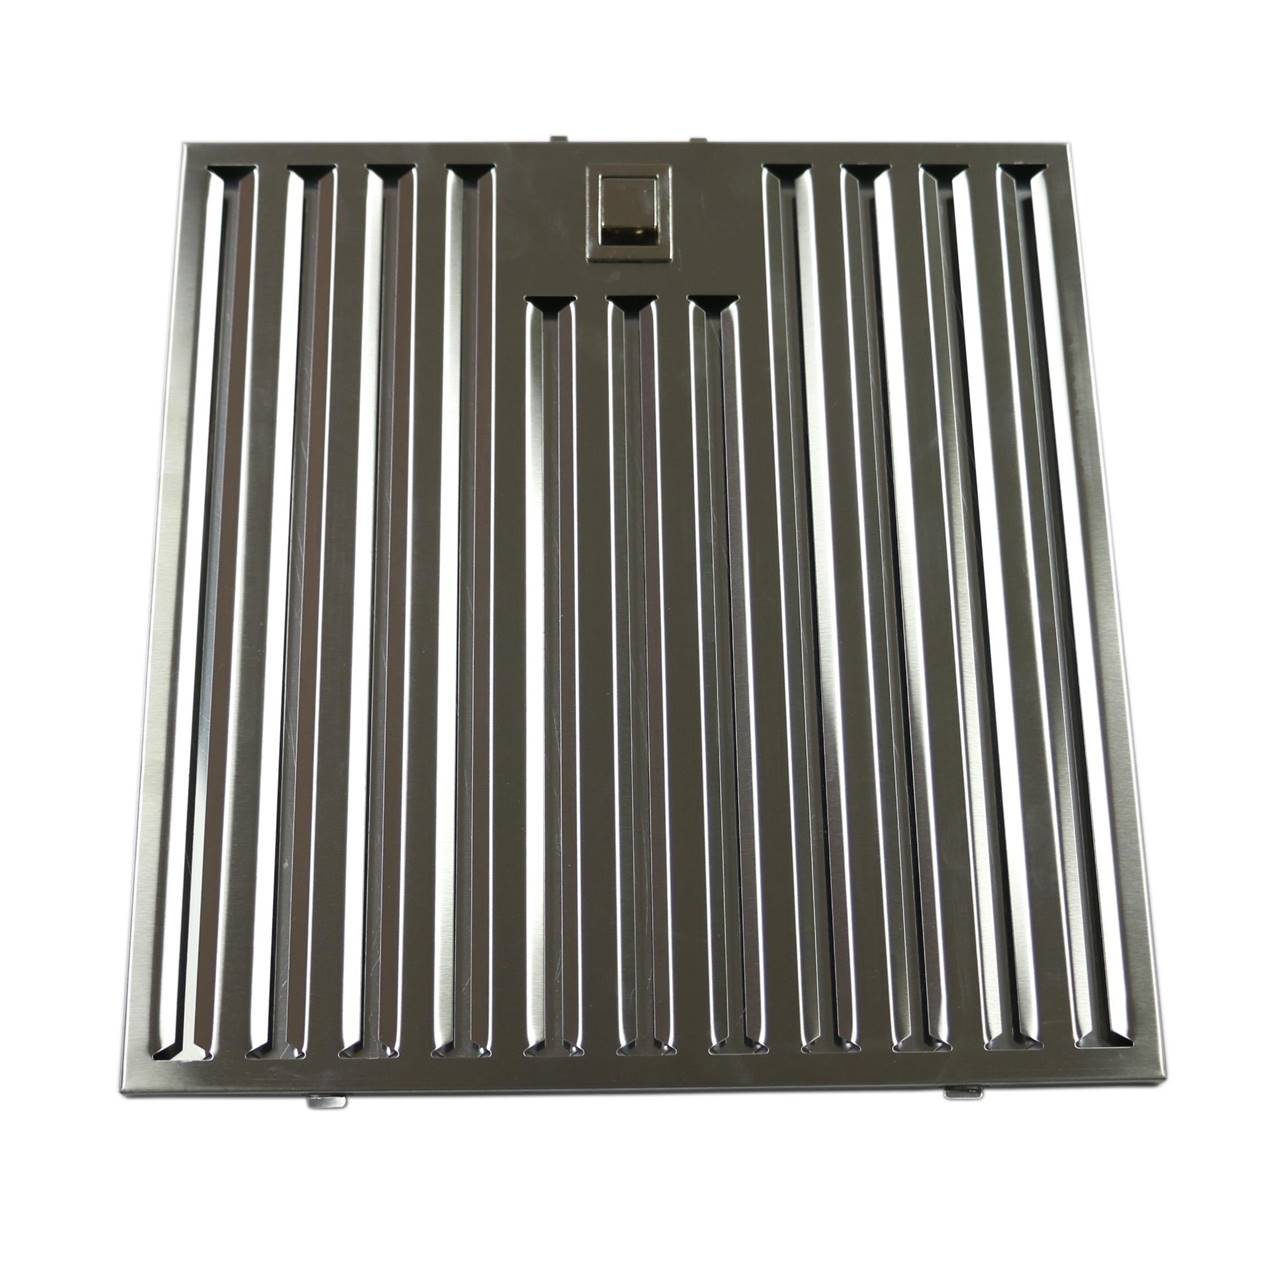 Awoco Stainless Steel Baffle Filter for Awoco 30" RH-C06-30, RH-R06-30, RH-SP-30, and 42" RH-C06-42 Range Hoods